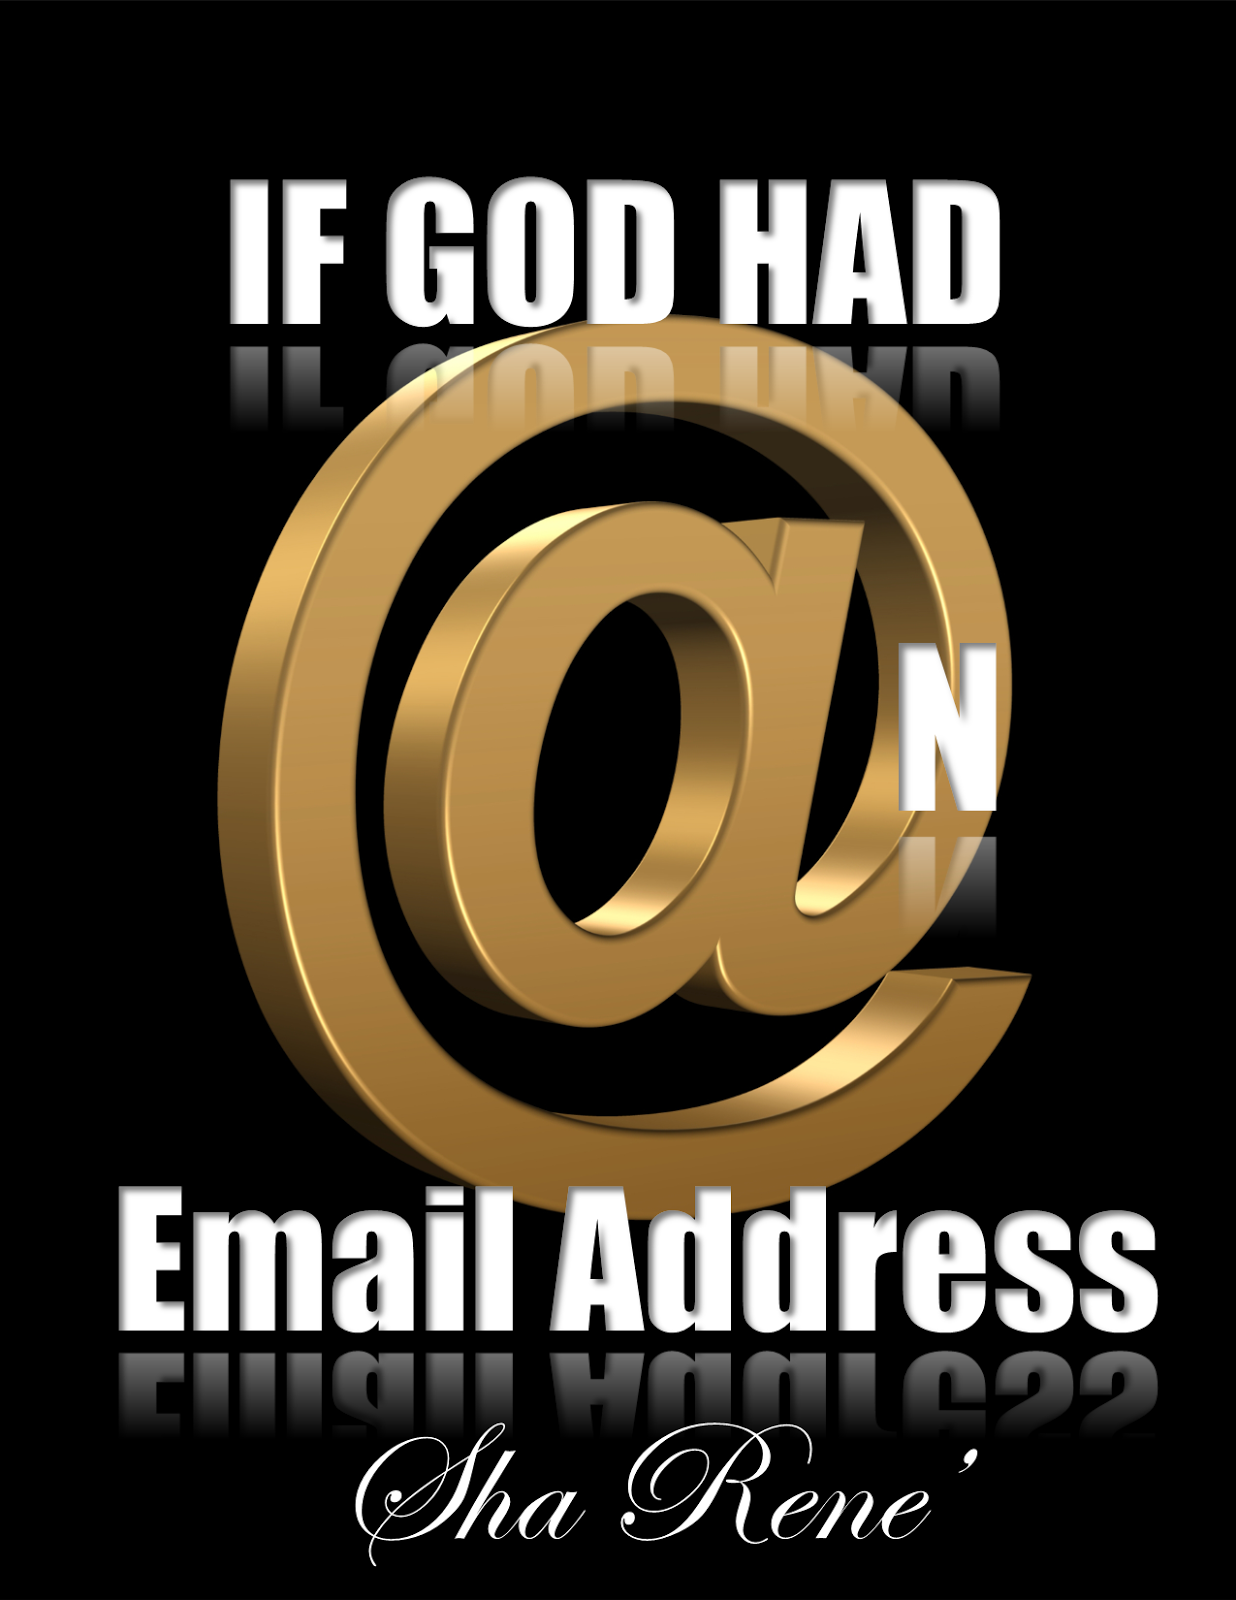 "If God had @n Email Address"